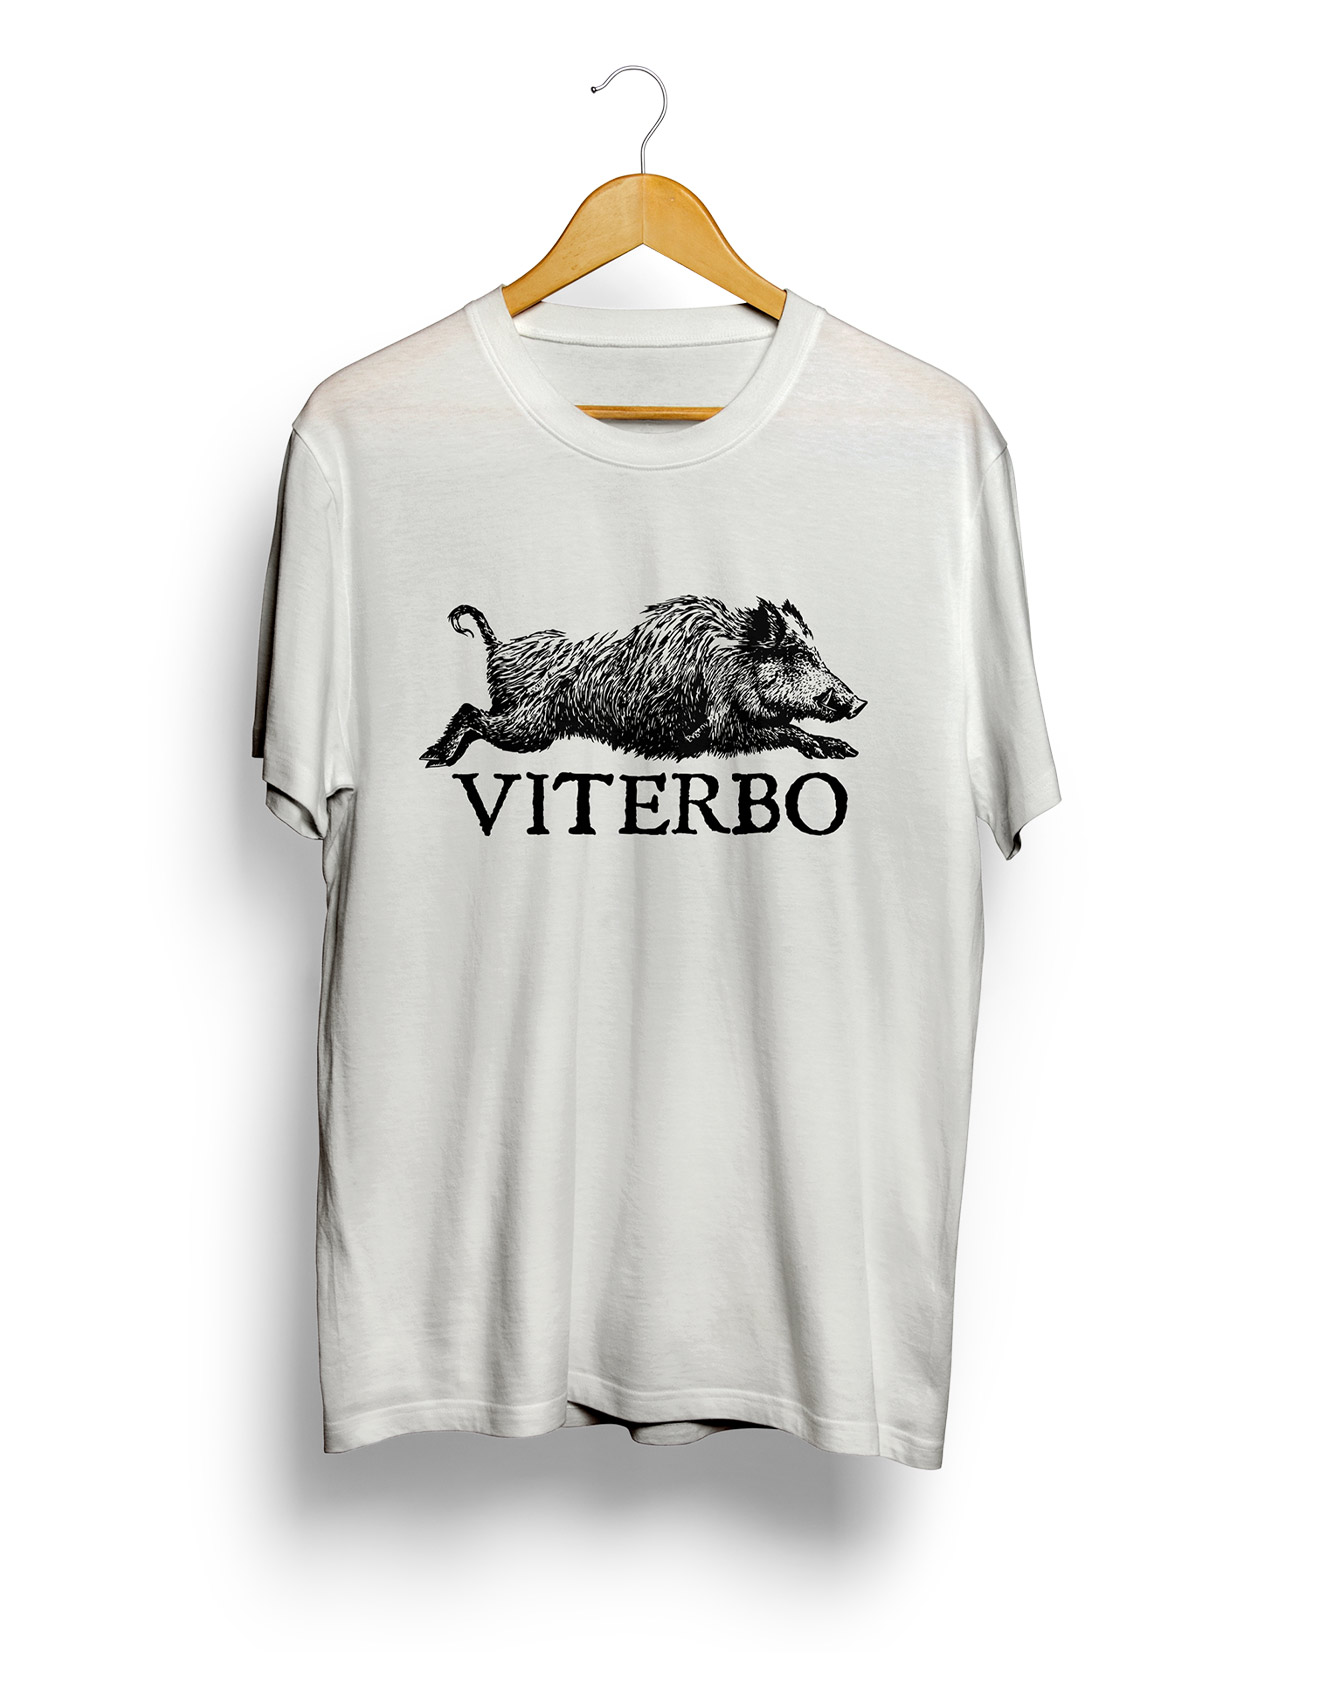 JUSTEES – Viterbo t-shirt